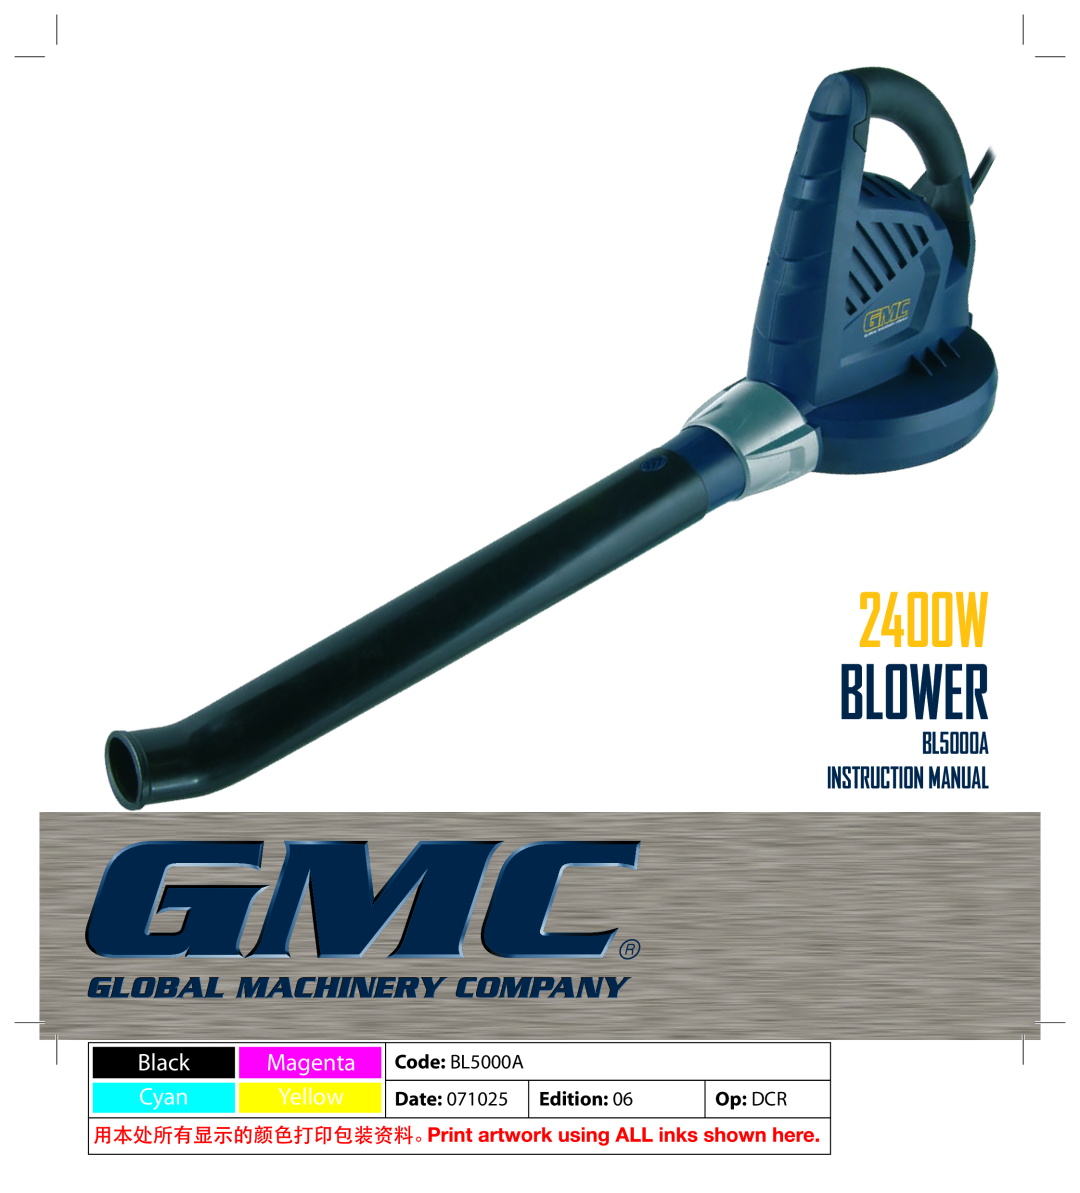 Global Machinery Company instruction manual 2400W BLOWER, BL5000A INSTRUCTION MANUAL, Black Magenta Cyan Yellow 